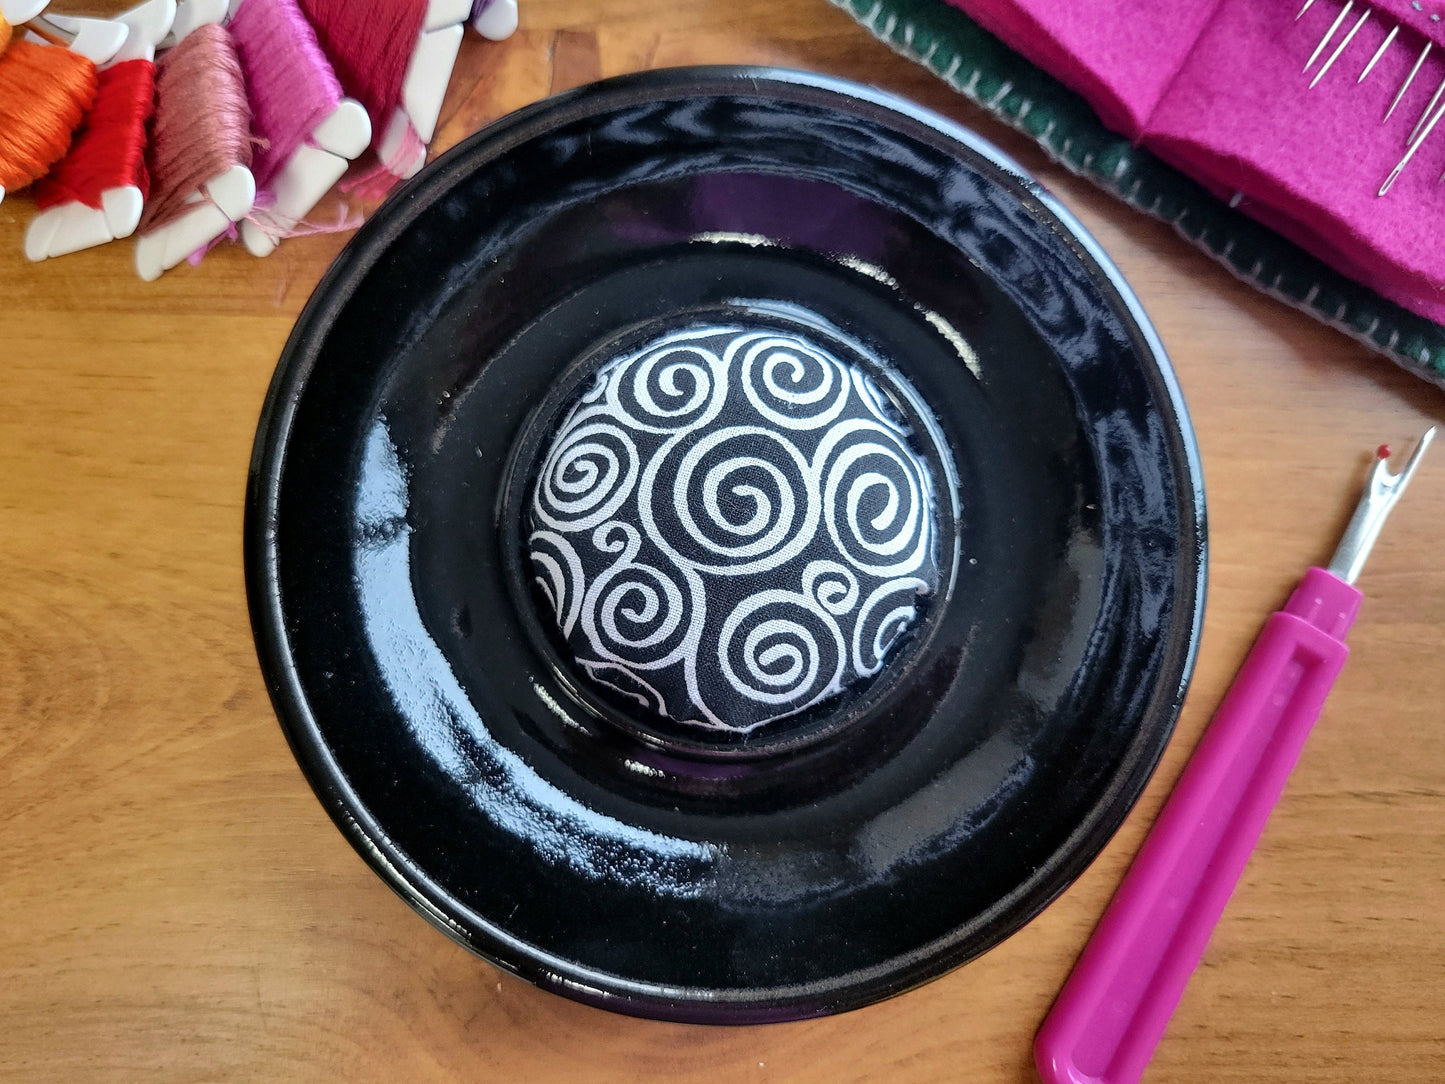 Sewing Notions Holder Dish with Pincushion - Needle Bobbin Storage Decor Black White Swirl Print